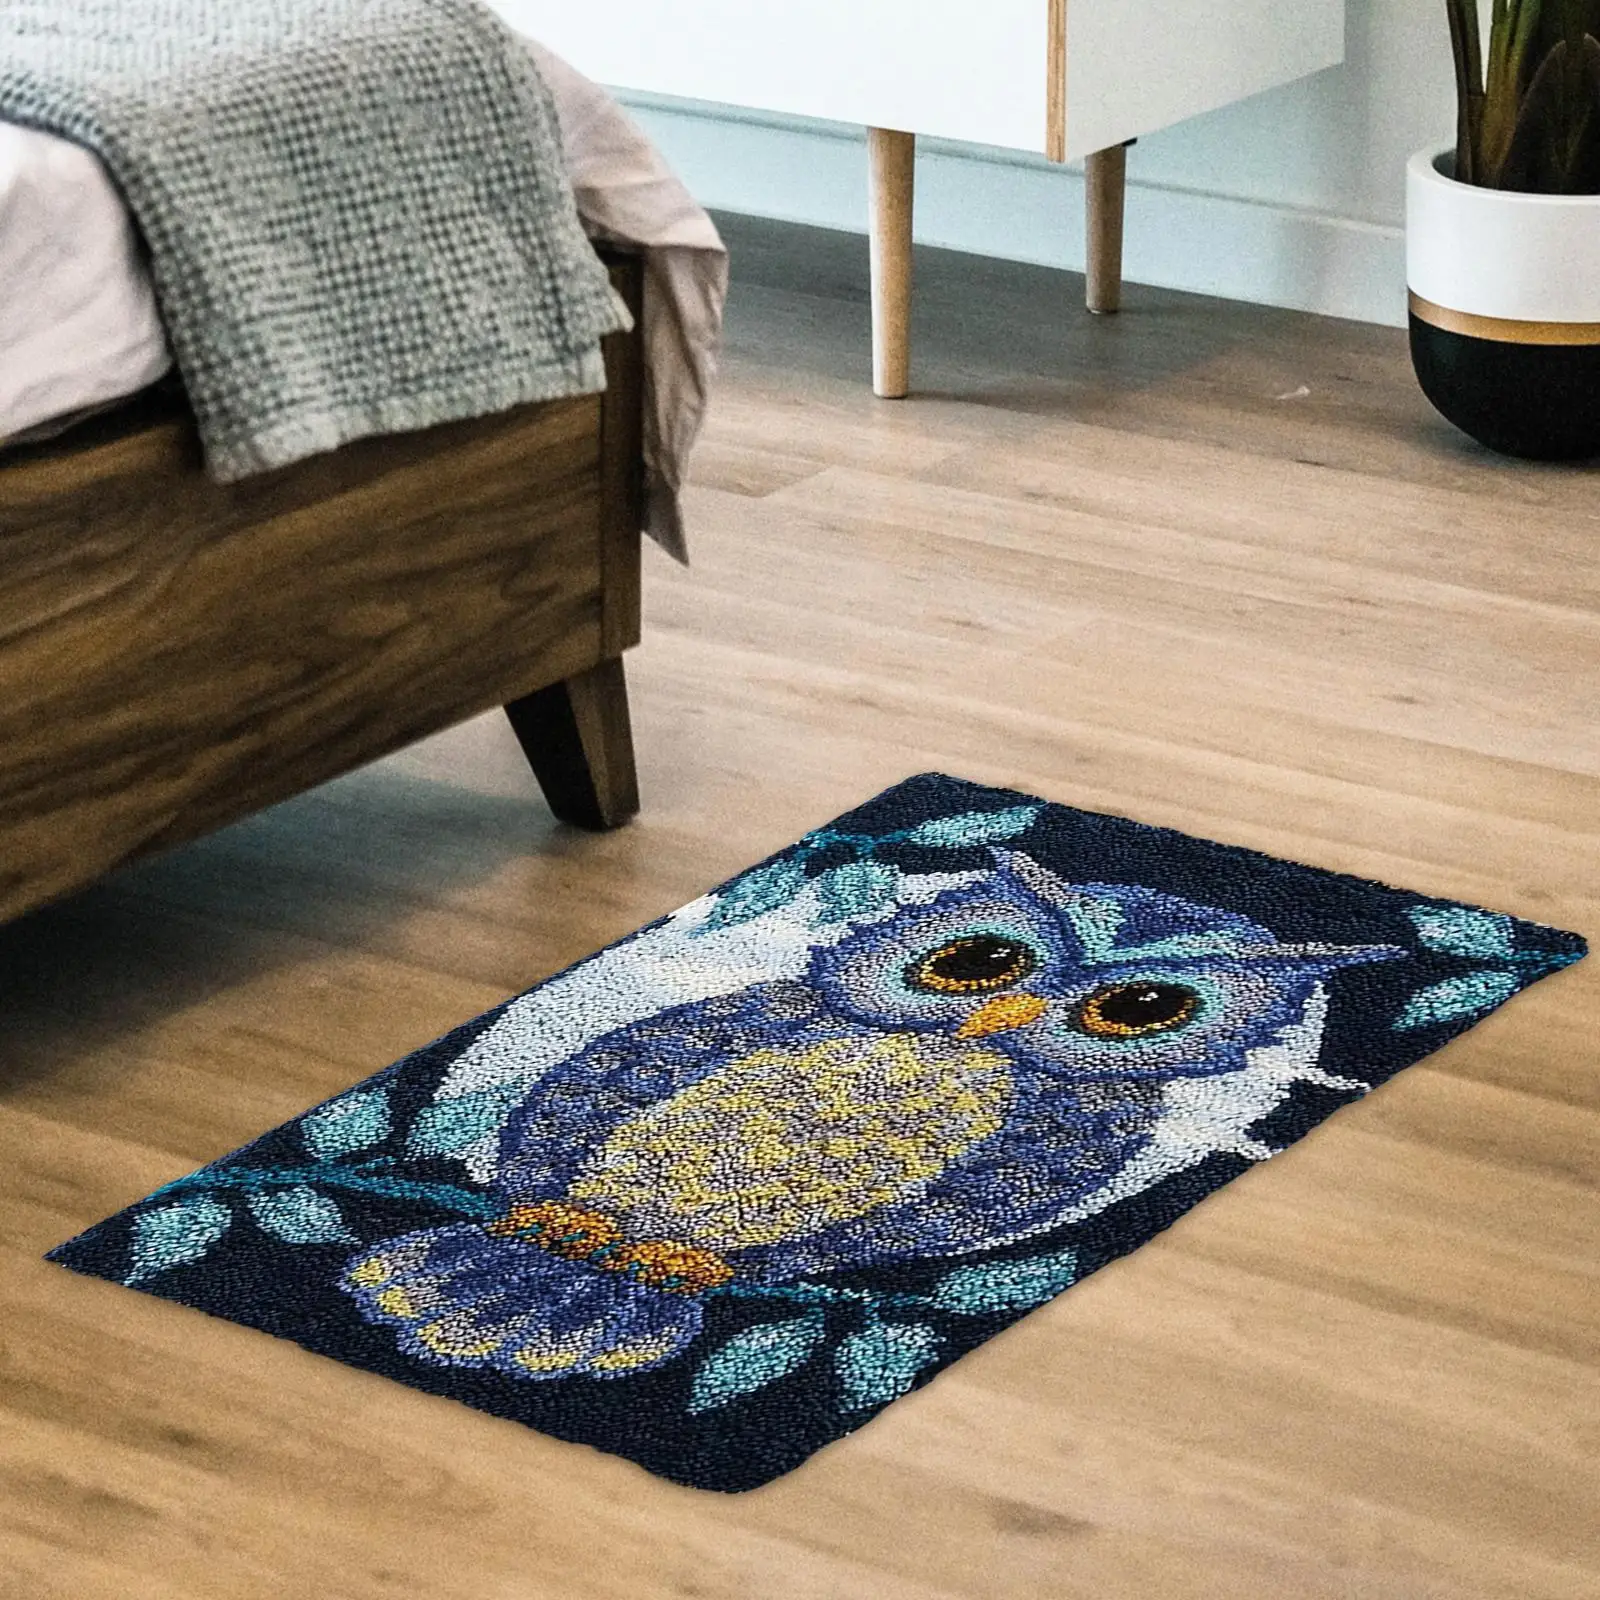 Owl Latch Hook Craft Kit Floor Mat for Adults Creative Hand Craft Carpet Making Kit